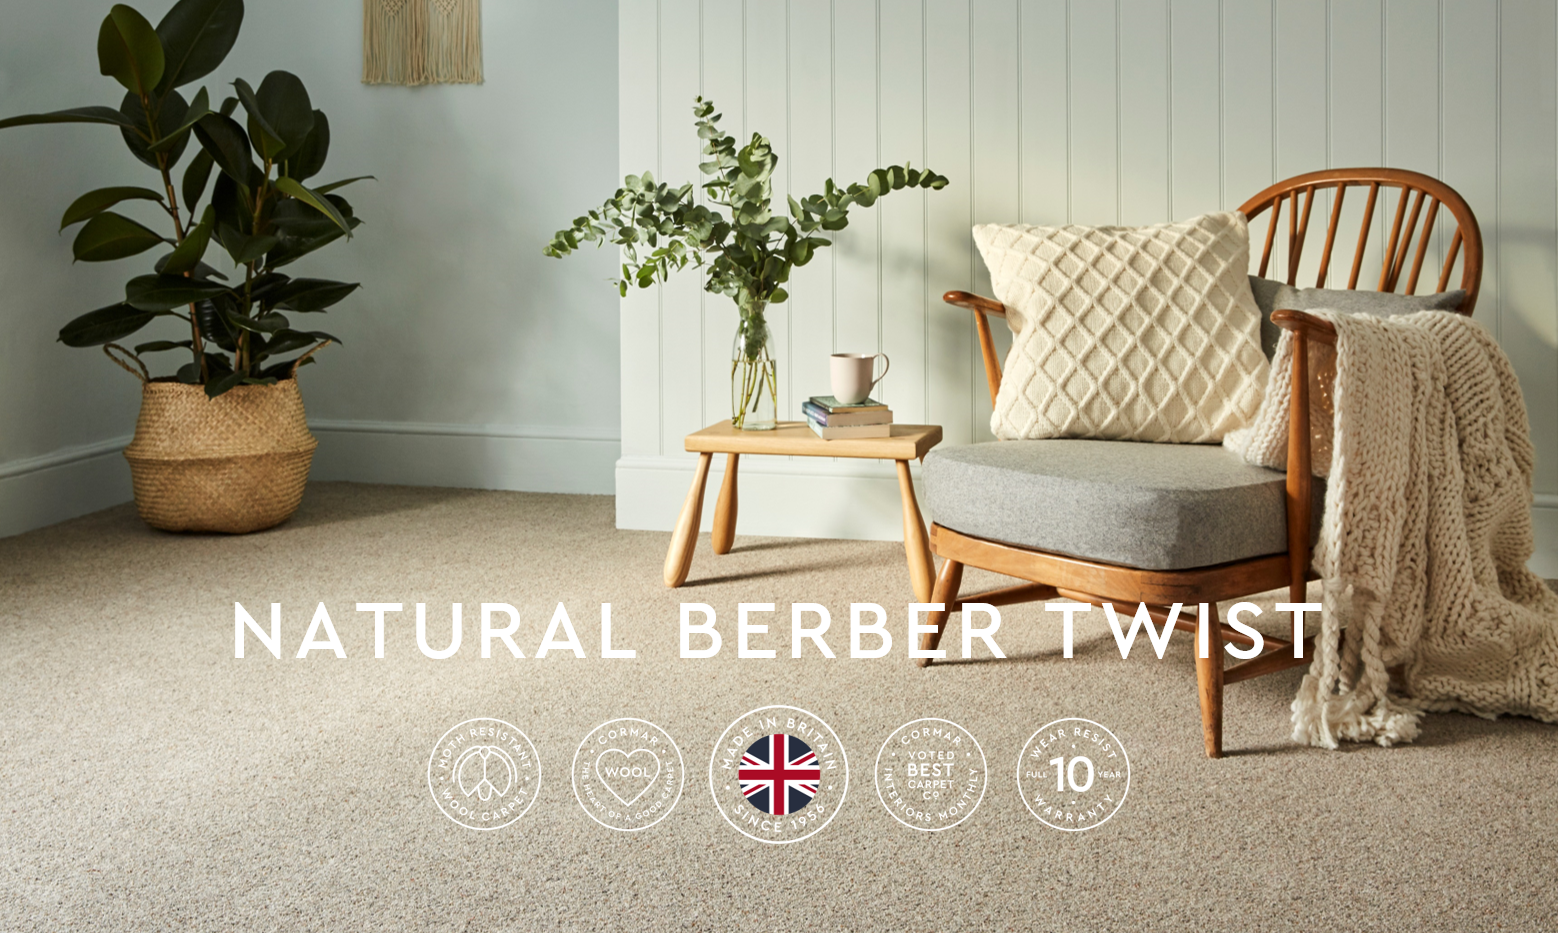 Natural Berber Twist has a fresh new look